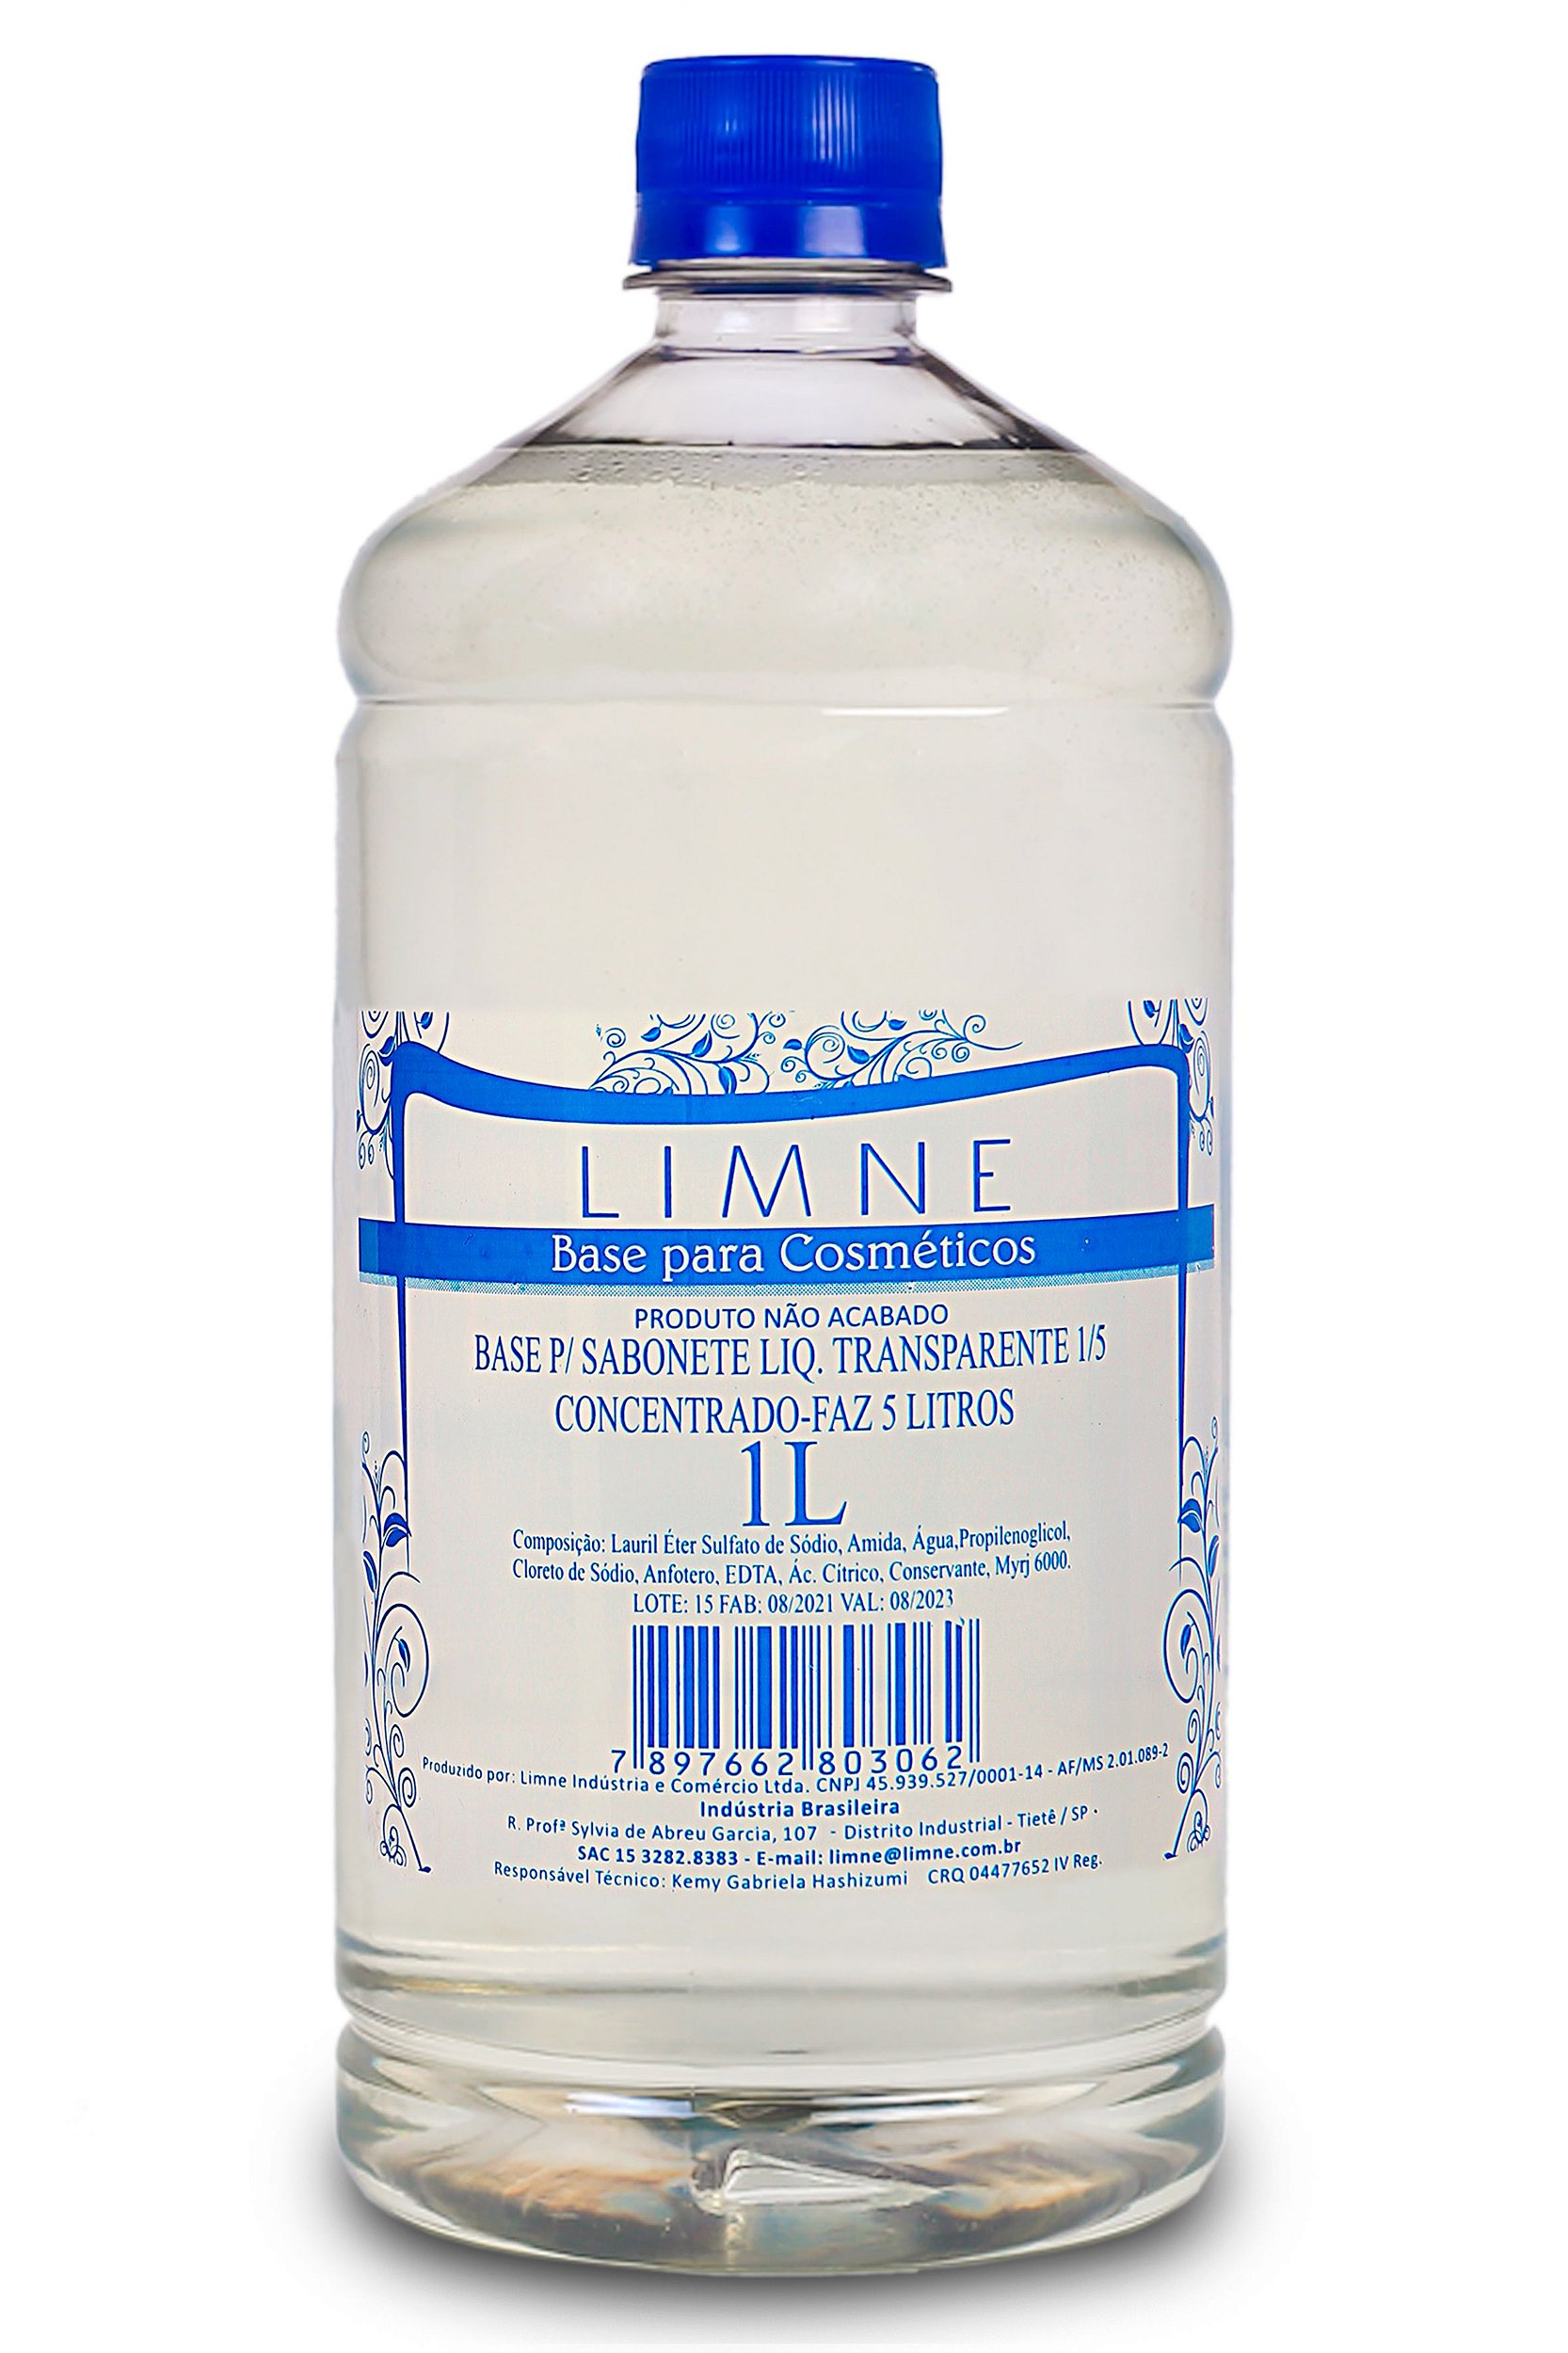 BASE SABONETE LÍQUIDO TRANSPARENTE 1/5 - Limne Cosméticos